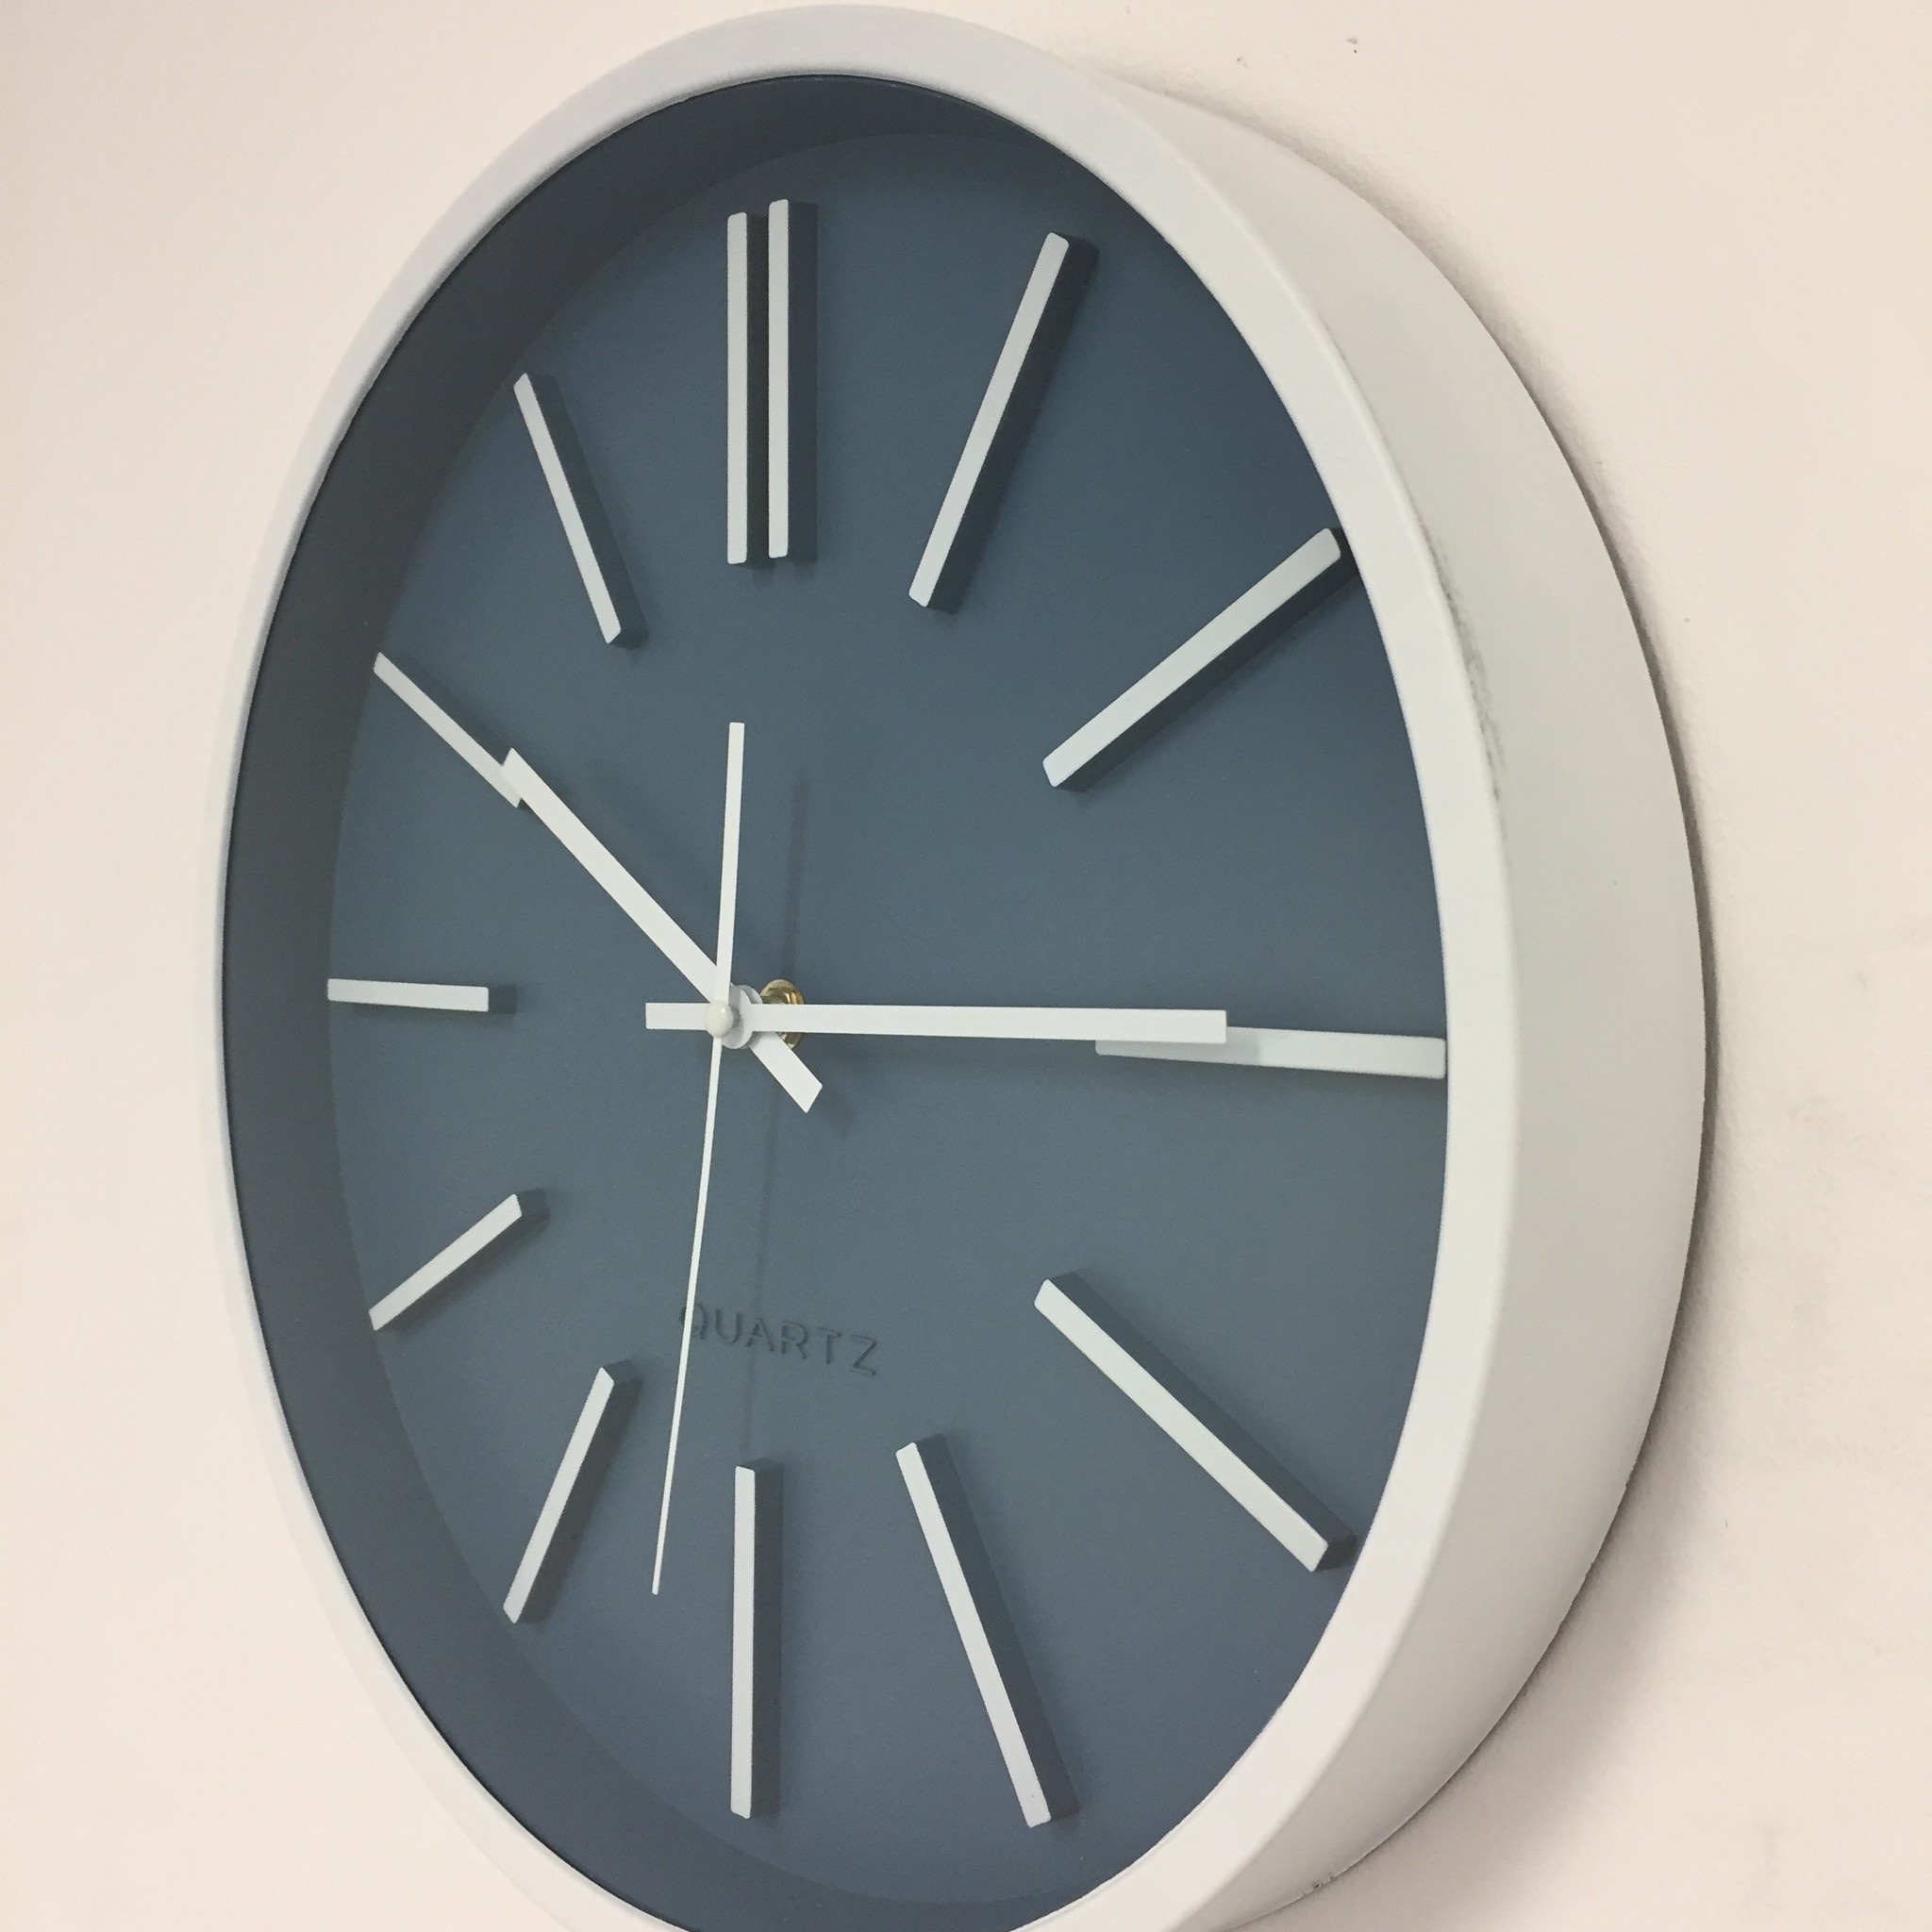 NiceTime Design - Wall clock White and Blue Modern Design